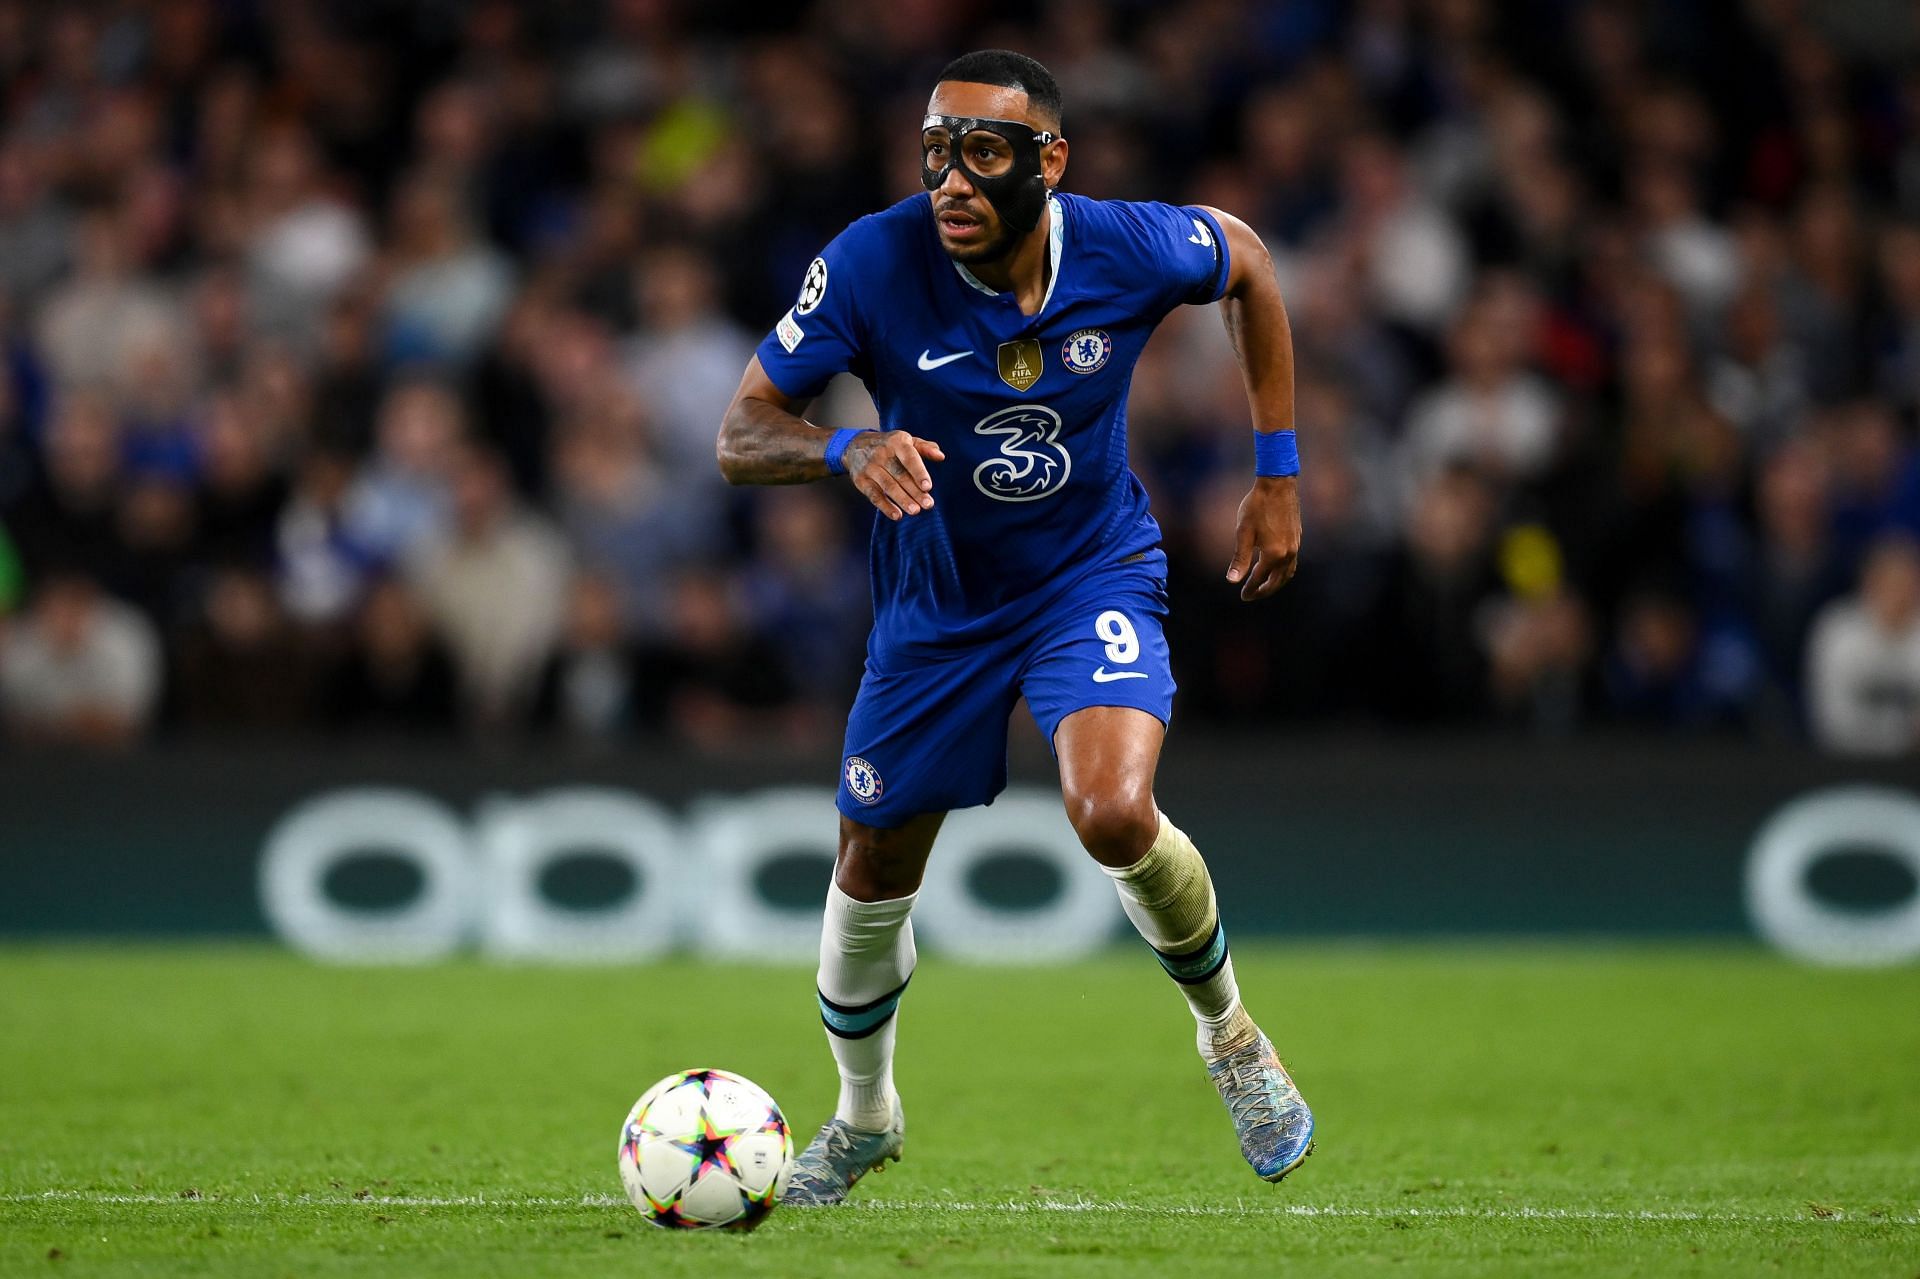 Pierre-Emerick Aubameyang moved to Stamford Bridge this summer.